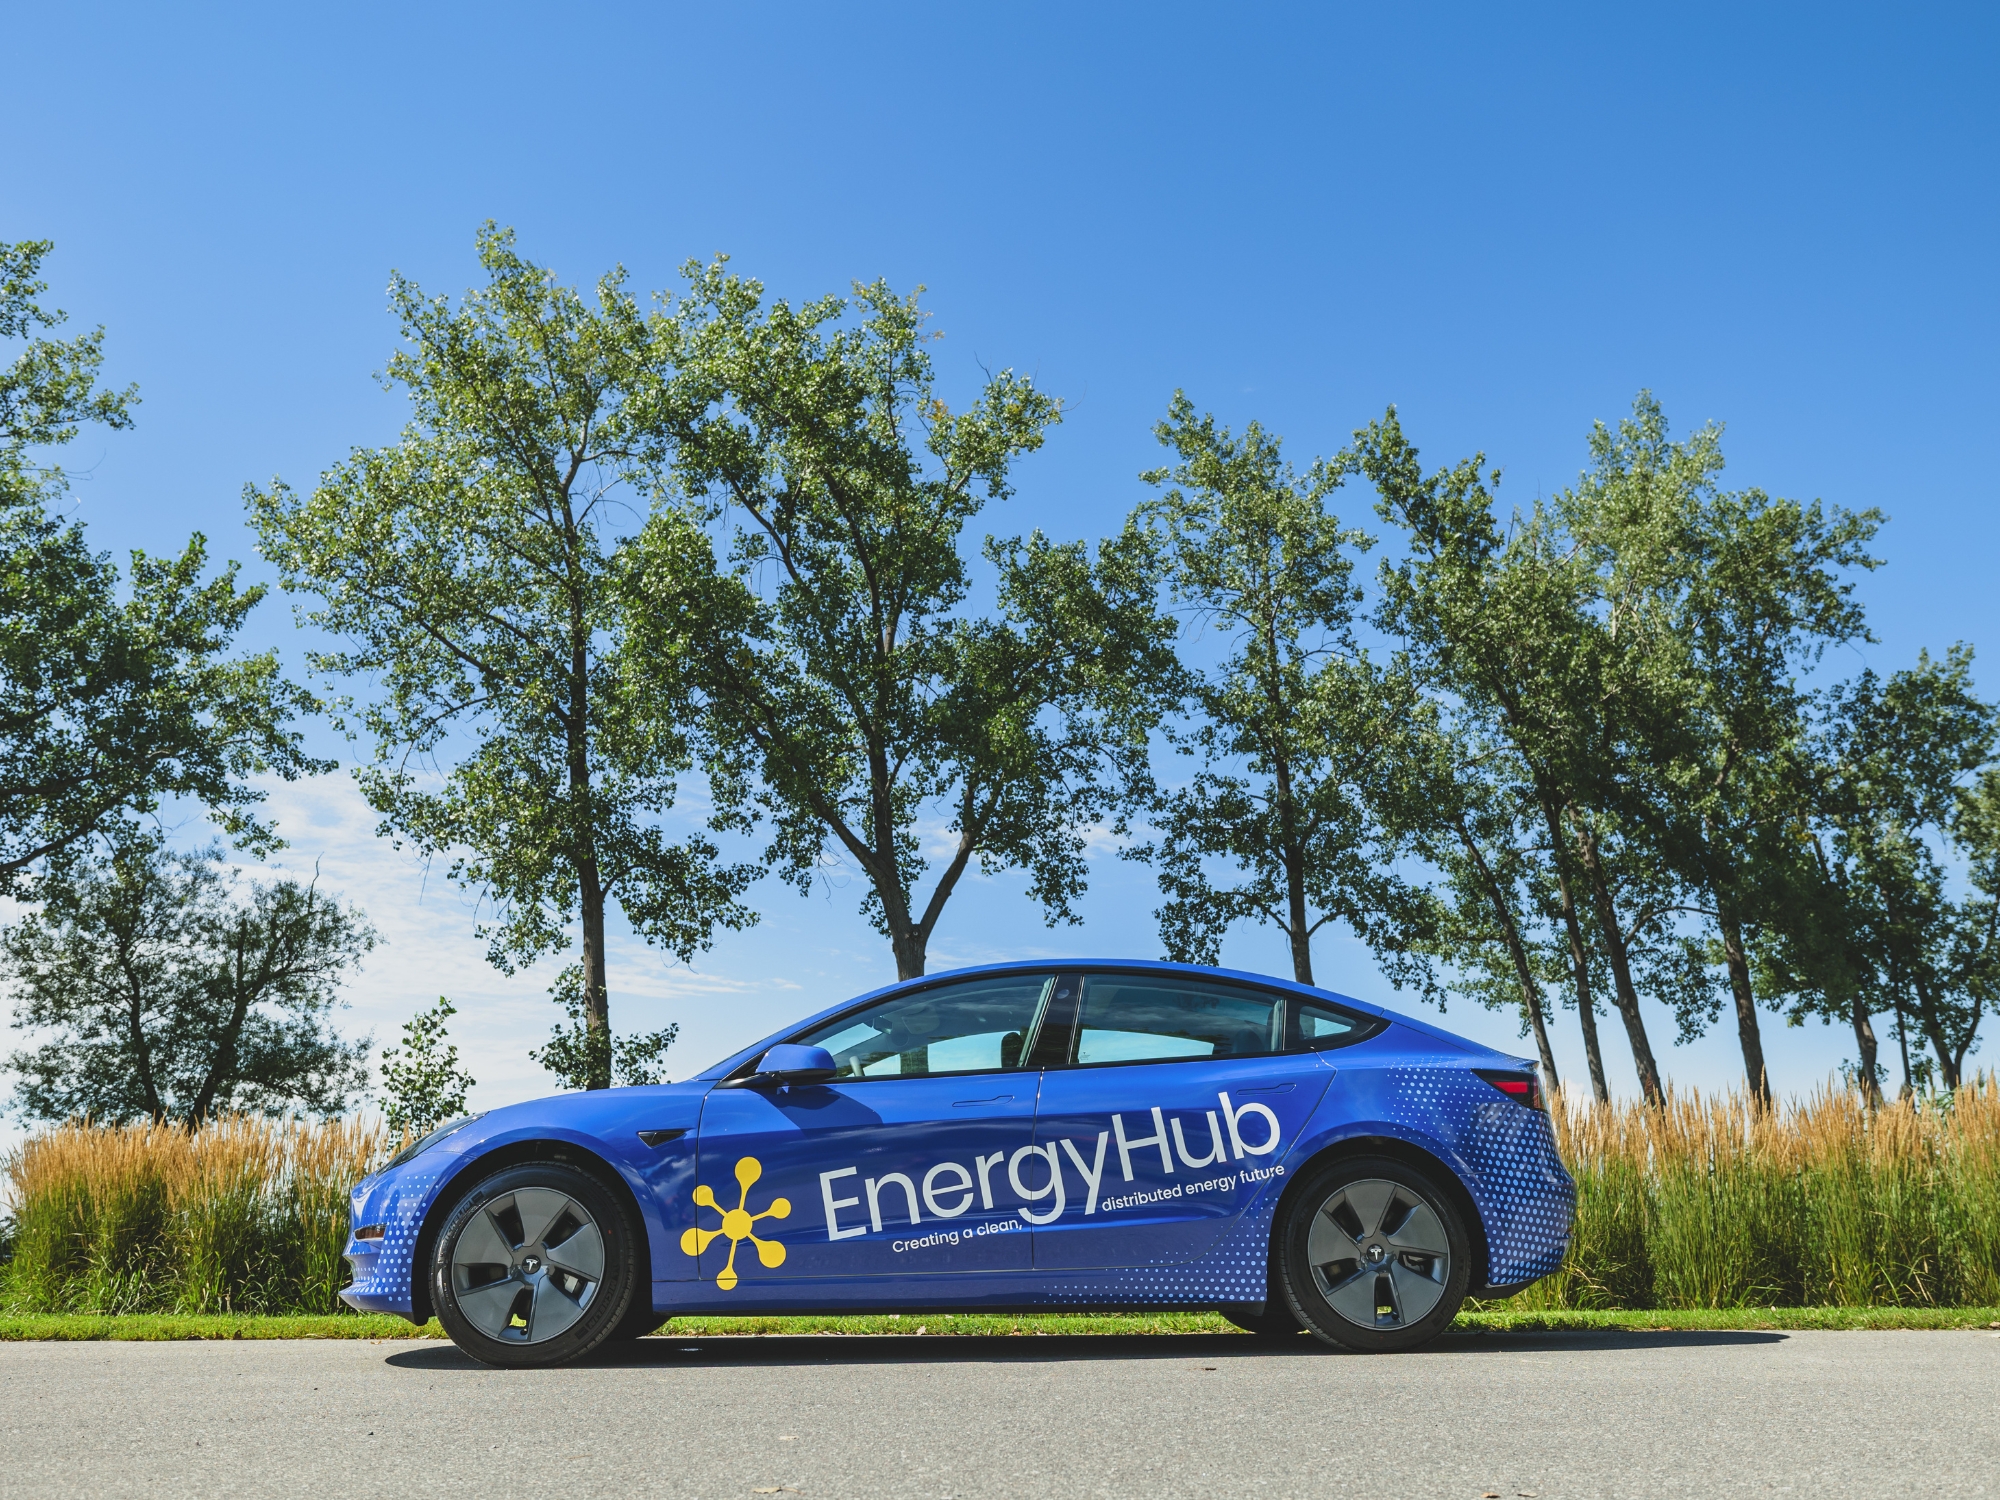 Full left side view of Tesla car wrap designed by Sonja Meyer, featuring EnergyHub logo across both doors.